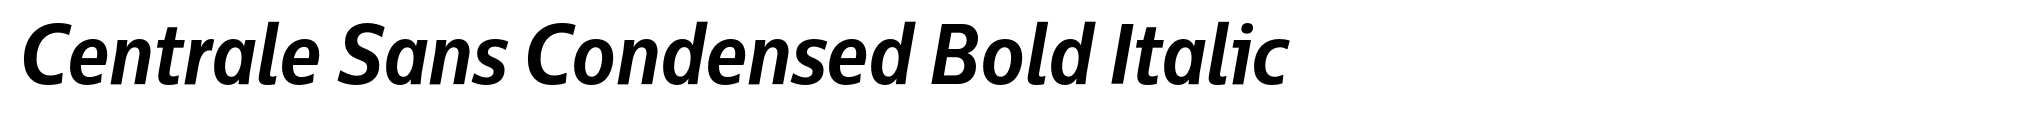 Centrale Sans Condensed Bold Italic image